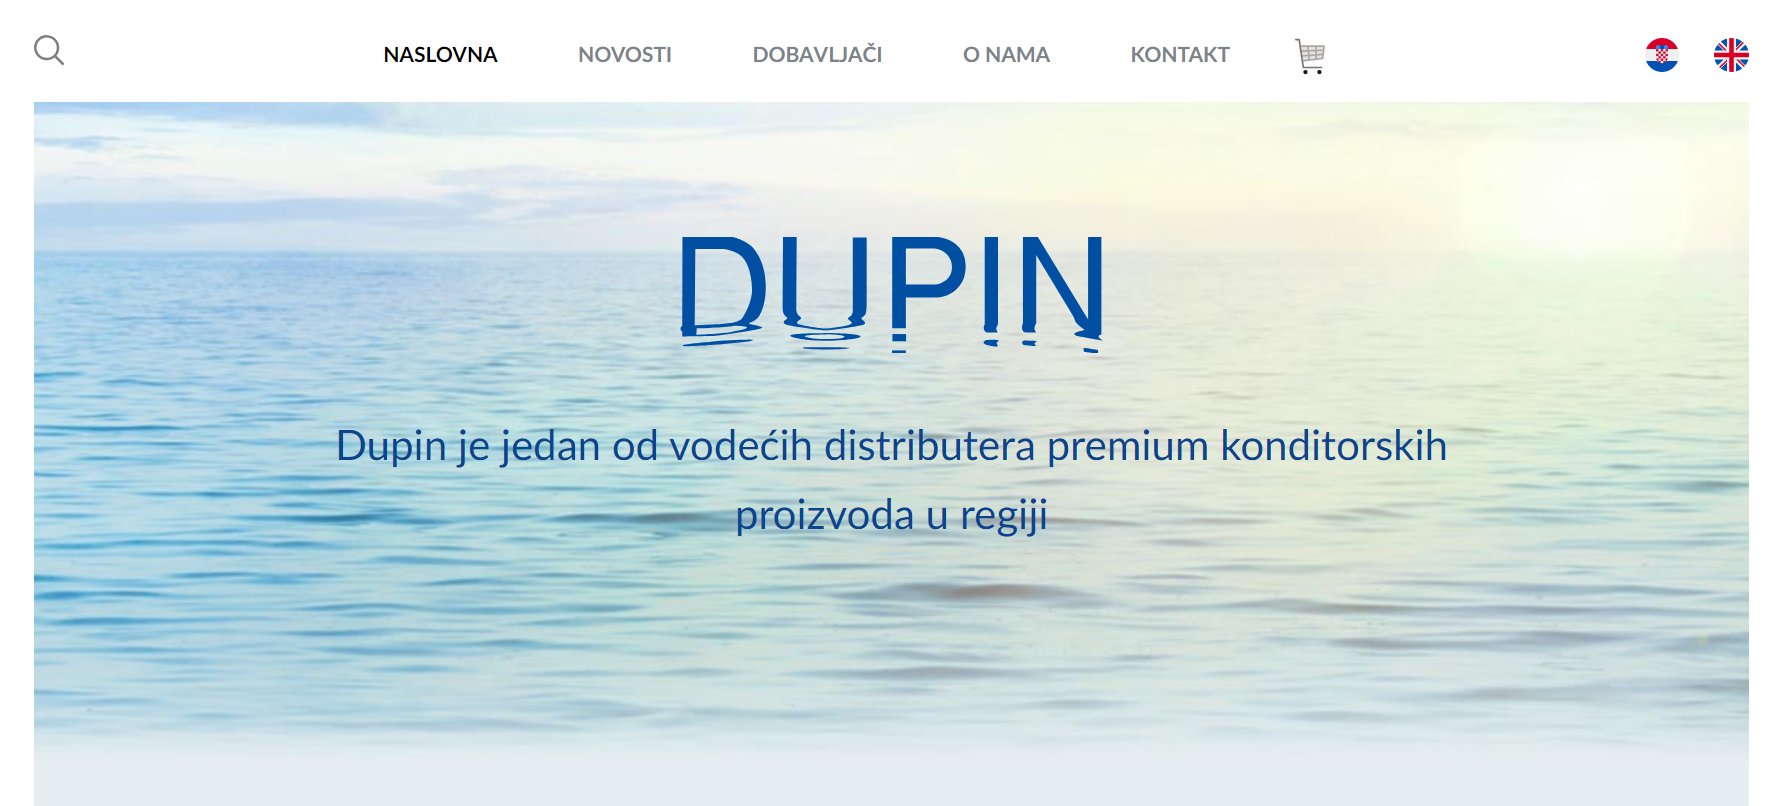 New Adria website